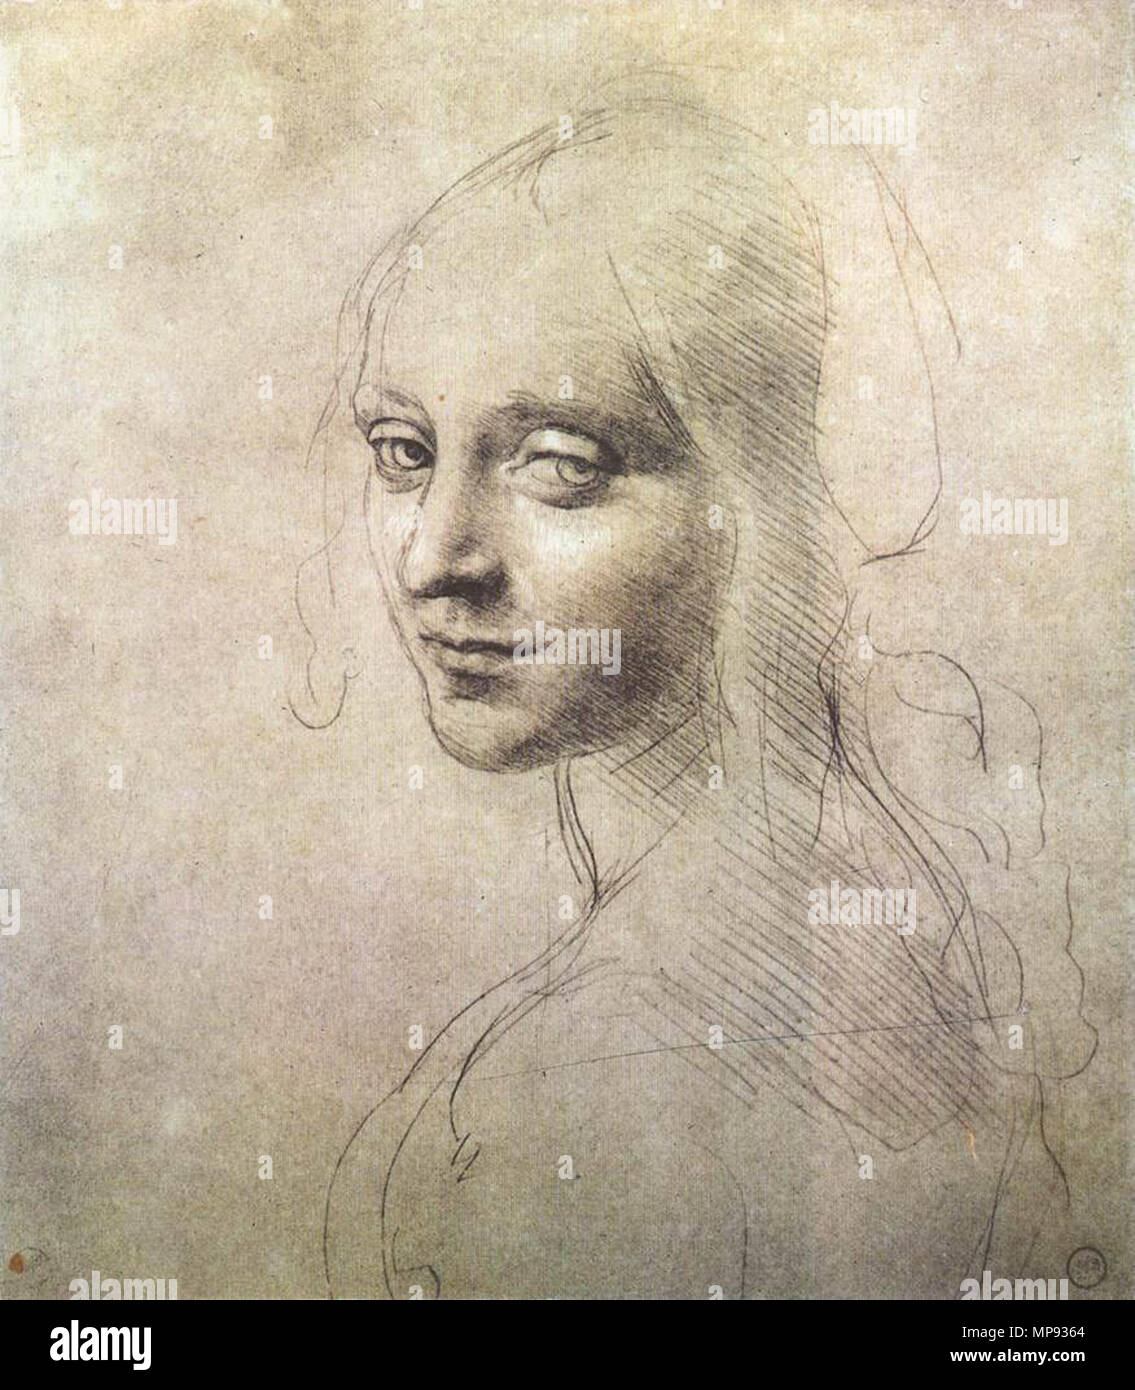 Lucan portrait of Leonardo da Vinci - Wikipedia